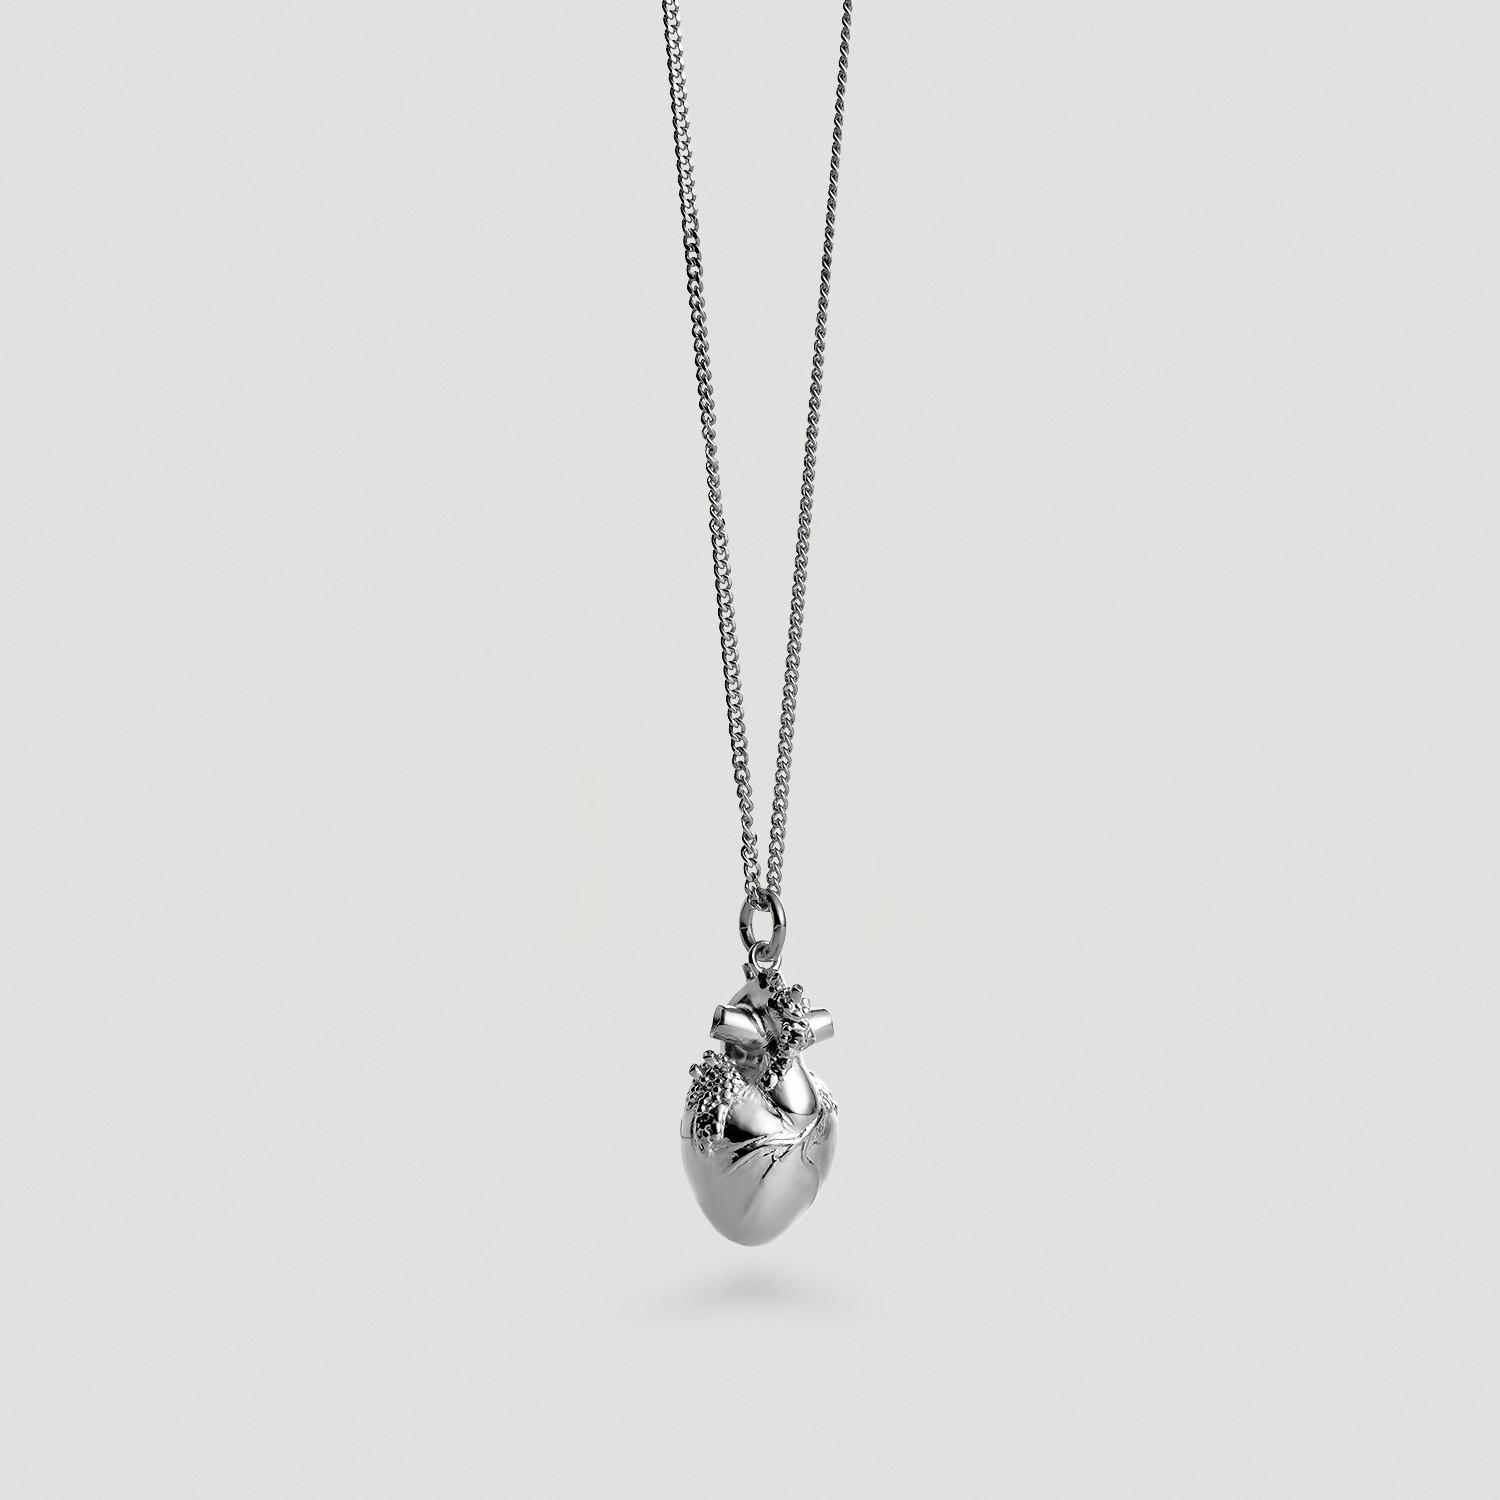 Blackberryheart Silver Man necklace